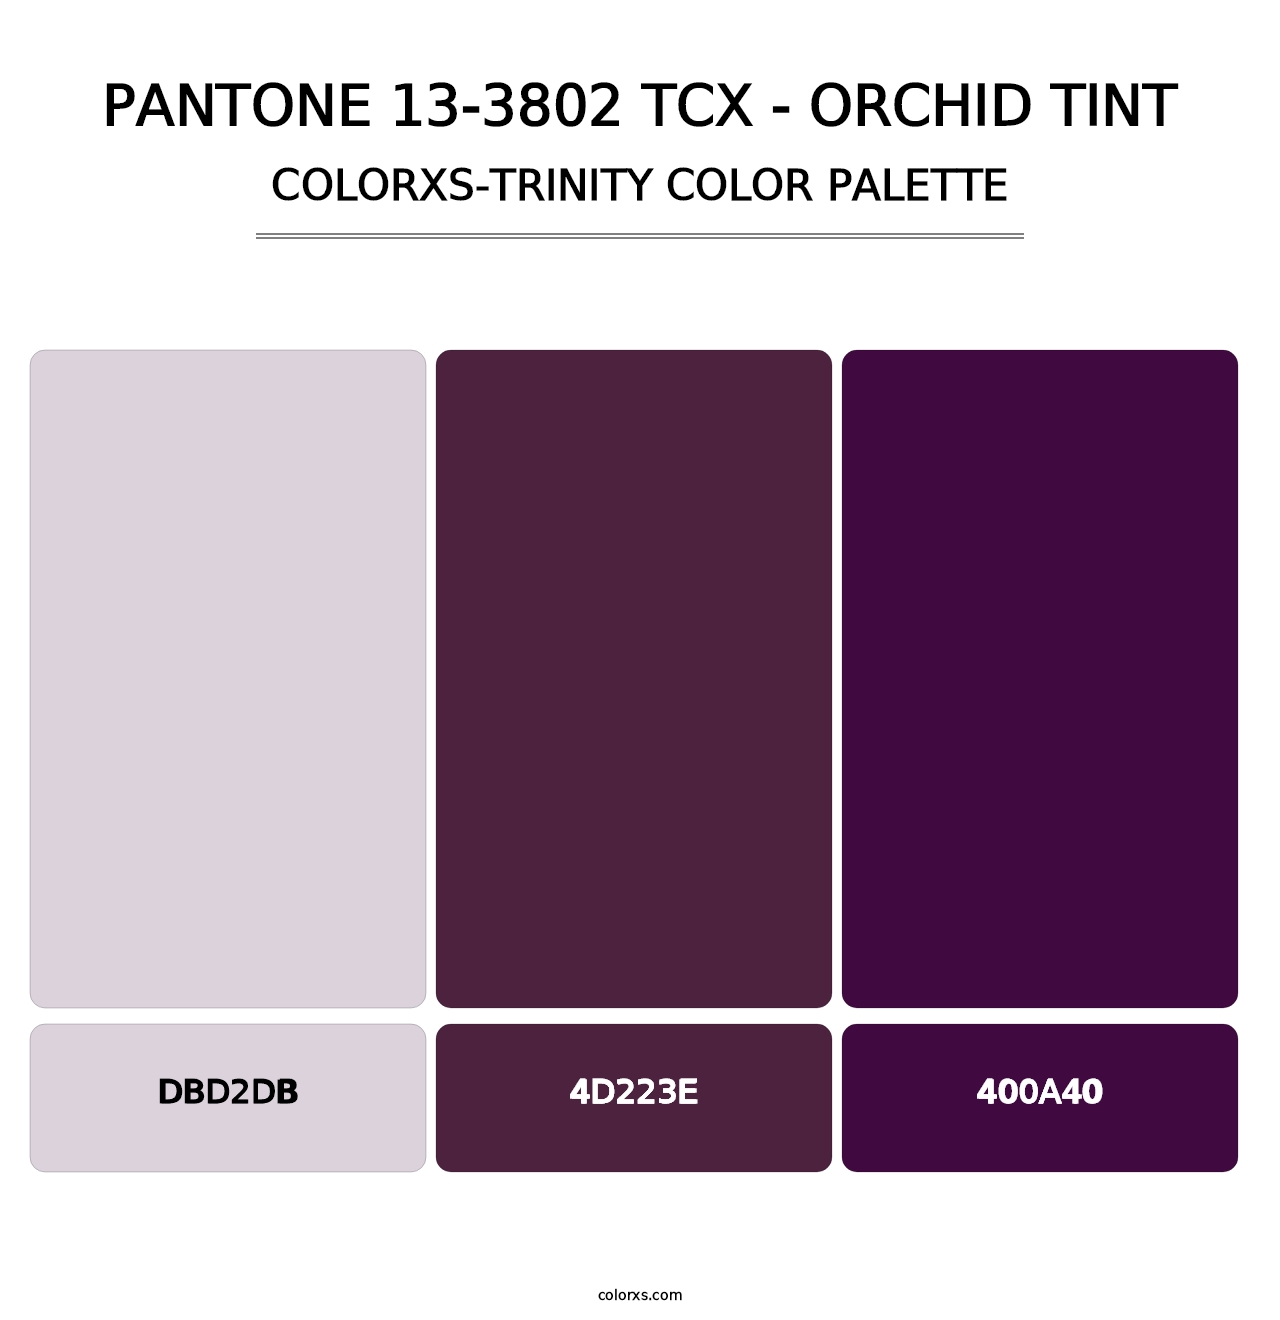 PANTONE 13-3802 TCX - Orchid Tint - Colorxs Trinity Palette